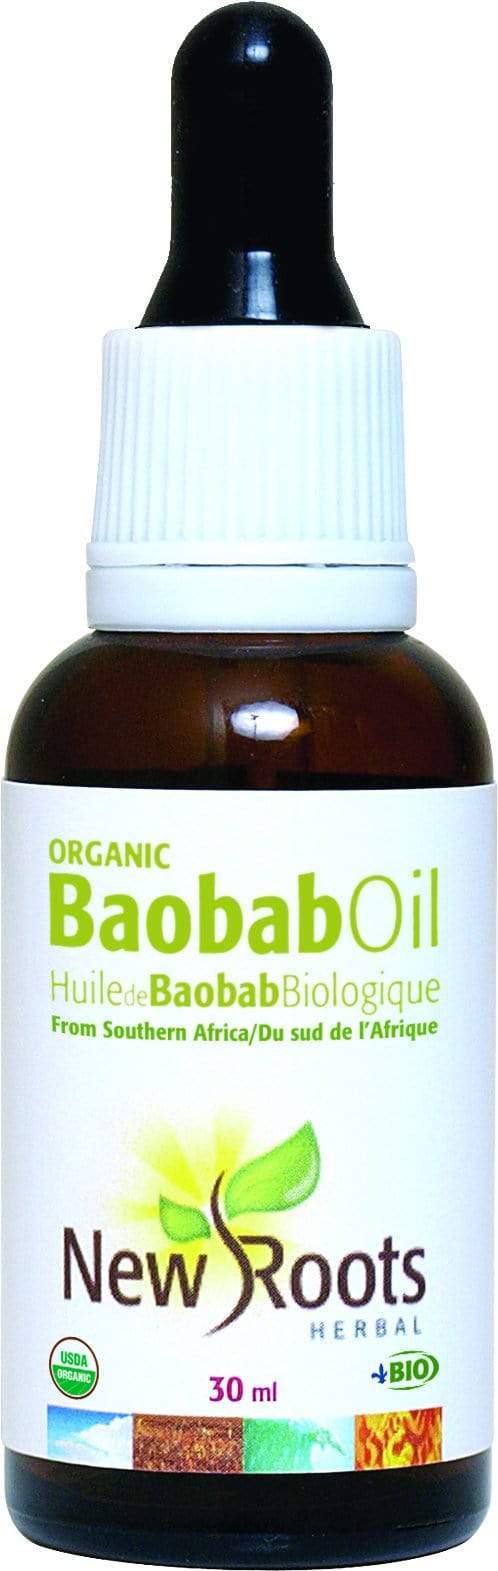 New Roots Organic Baobab Oil